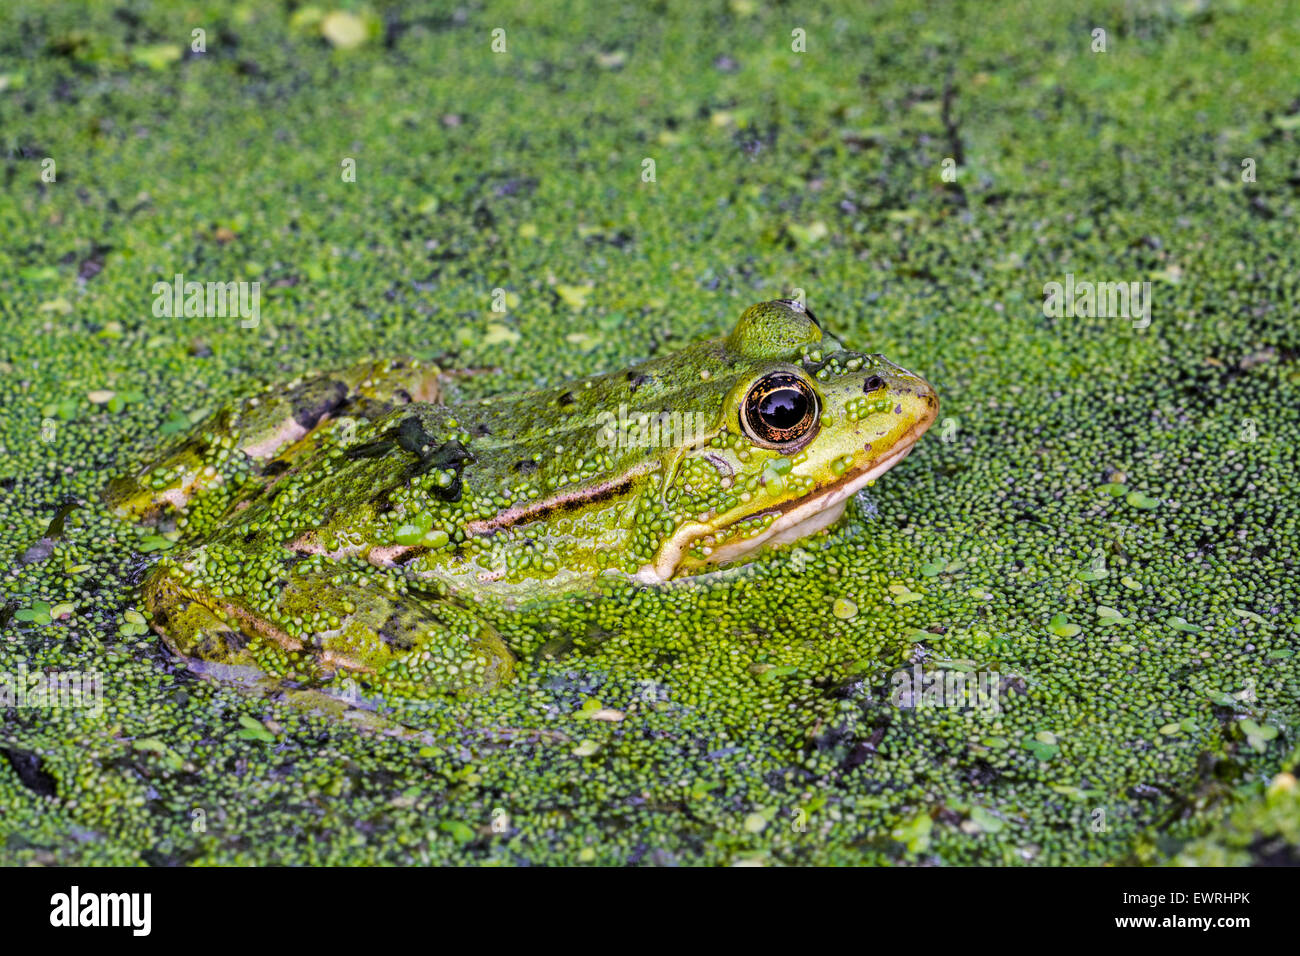 Edible frog / common water frog / green frog (Pelophylax kl. esculentus / Rana kl. esculenta) floating among duckweed in pond Stock Photo